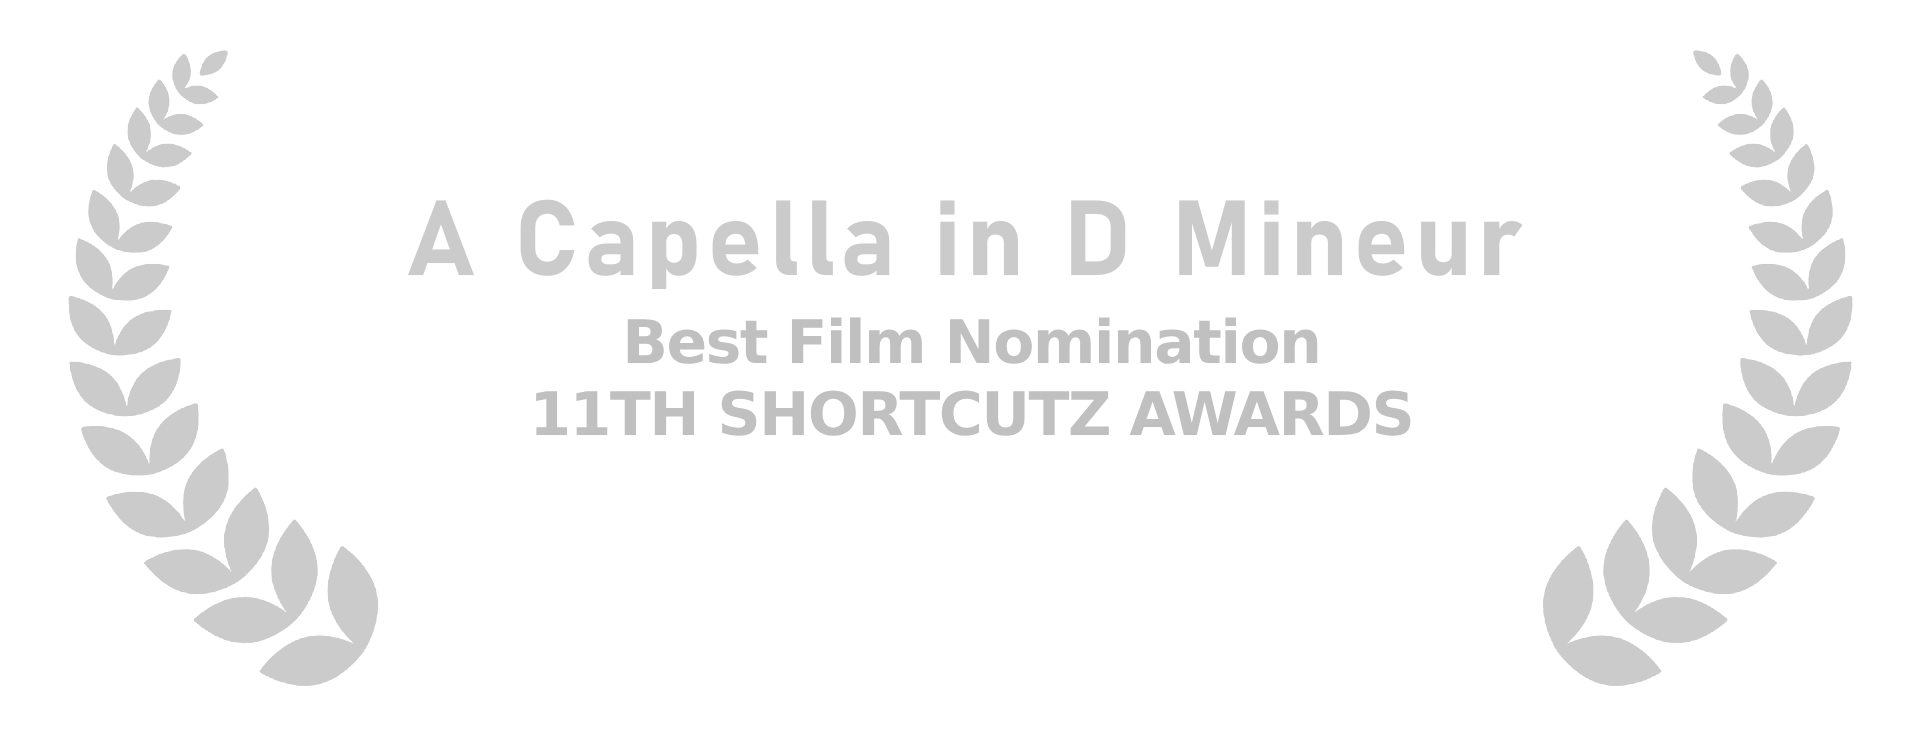 ShortCutz Best Film Nomination A Capella in D Mineur